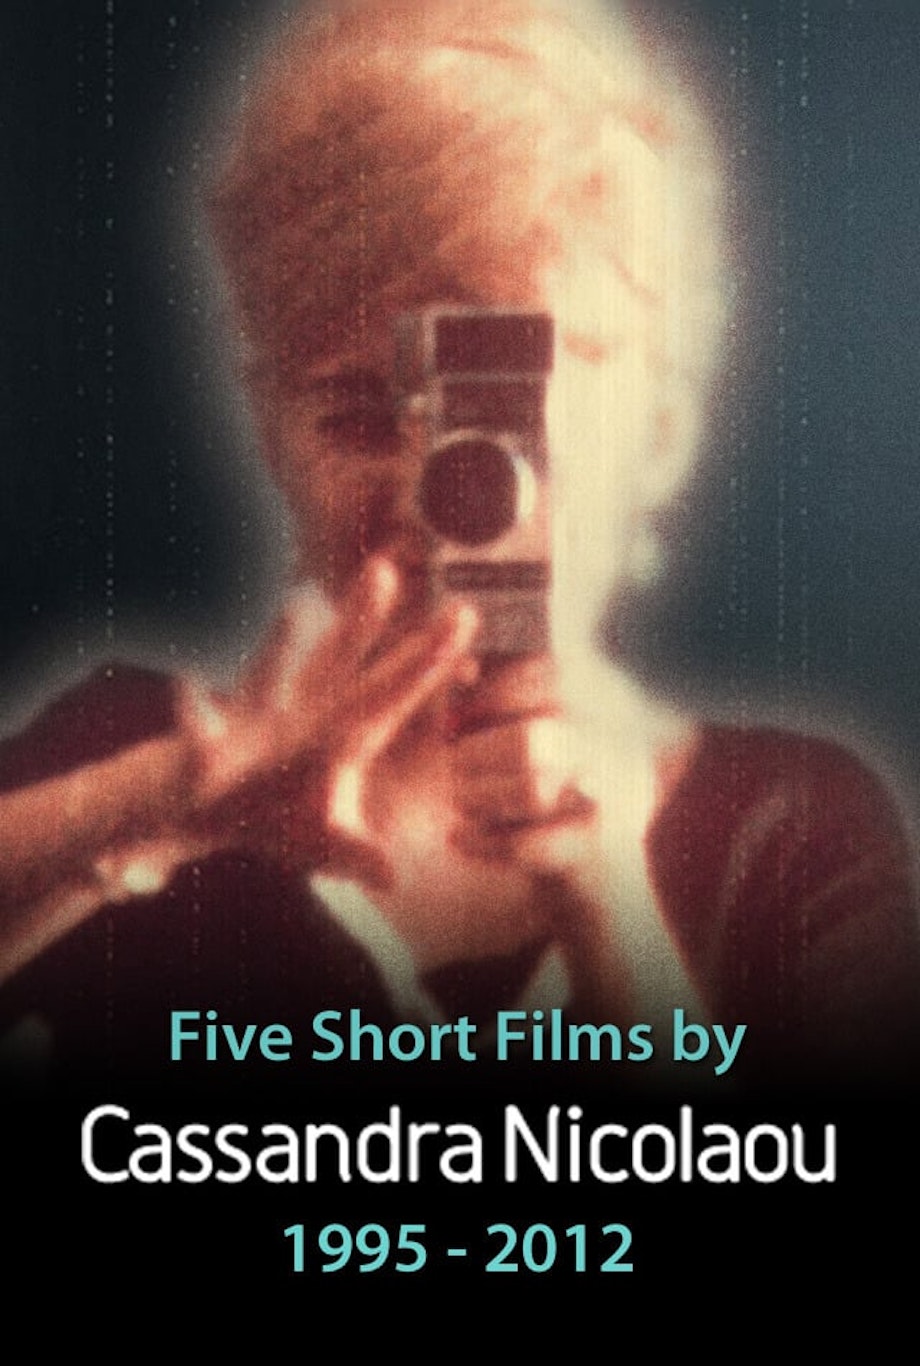 Five Short Films by Cassandra Nicolaou